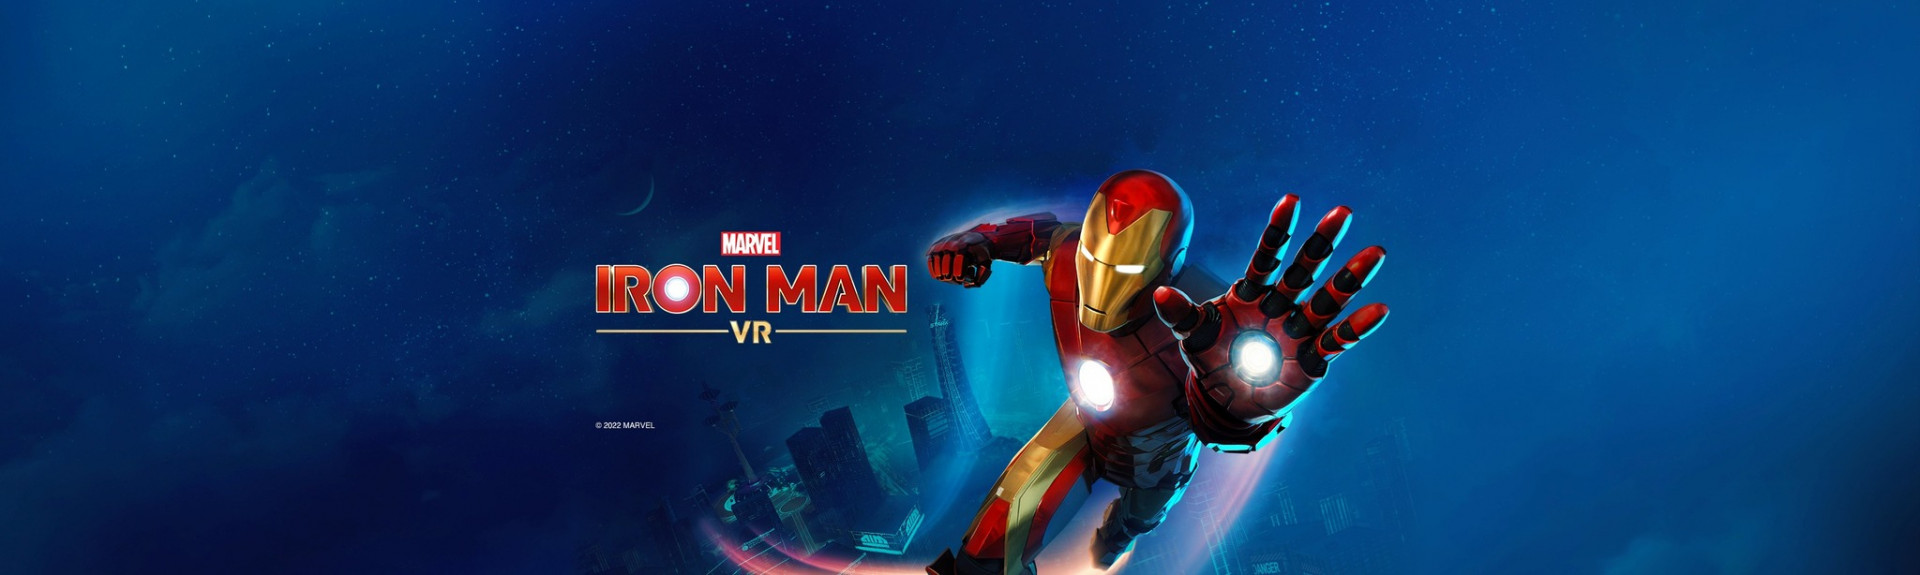 Marvel’s Iron Man VR: ANÁLISIS QUEST 2